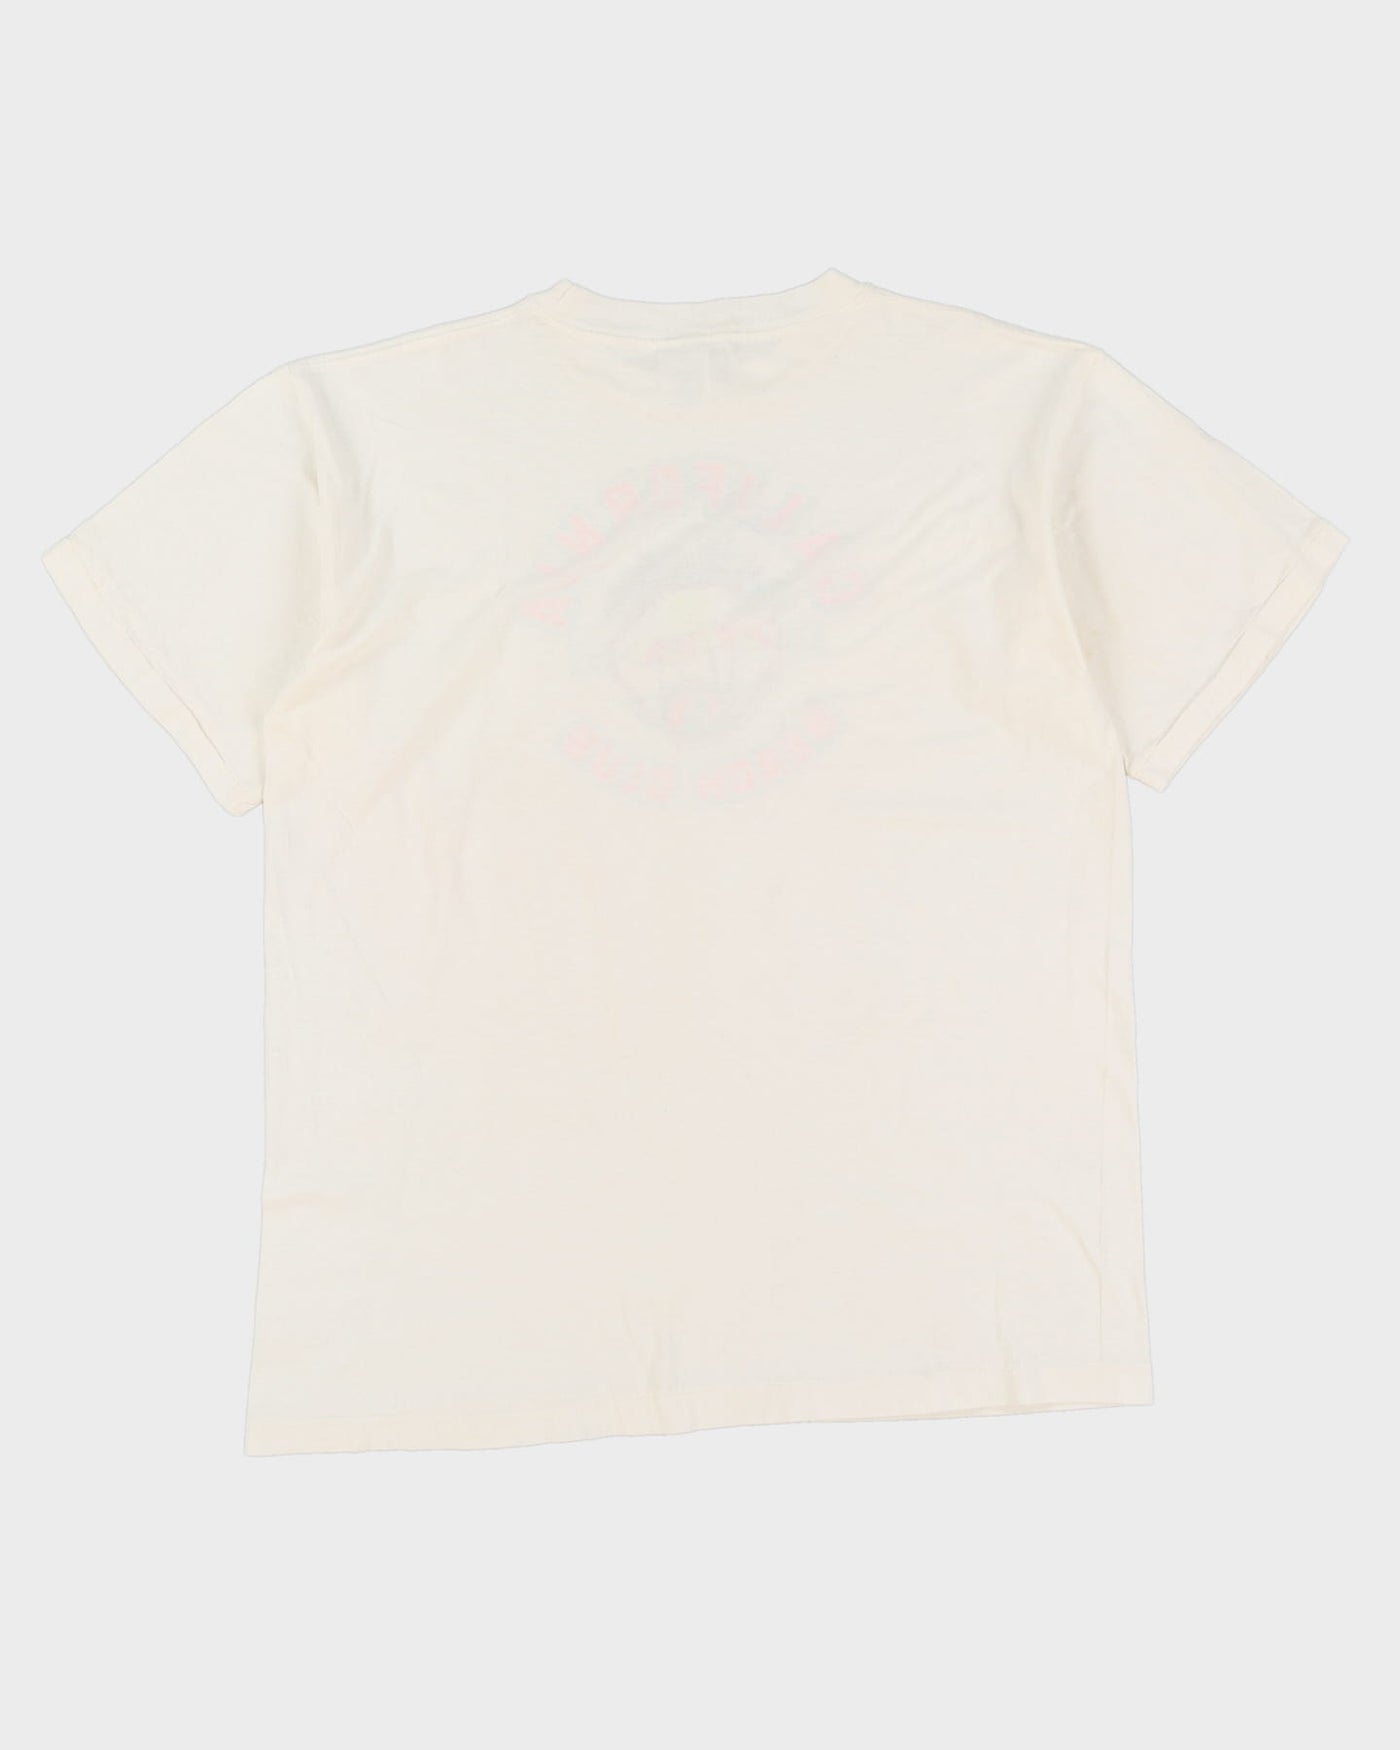 Vintage 80s California Beach Club White Single Stitch T-Shirt - L / XL